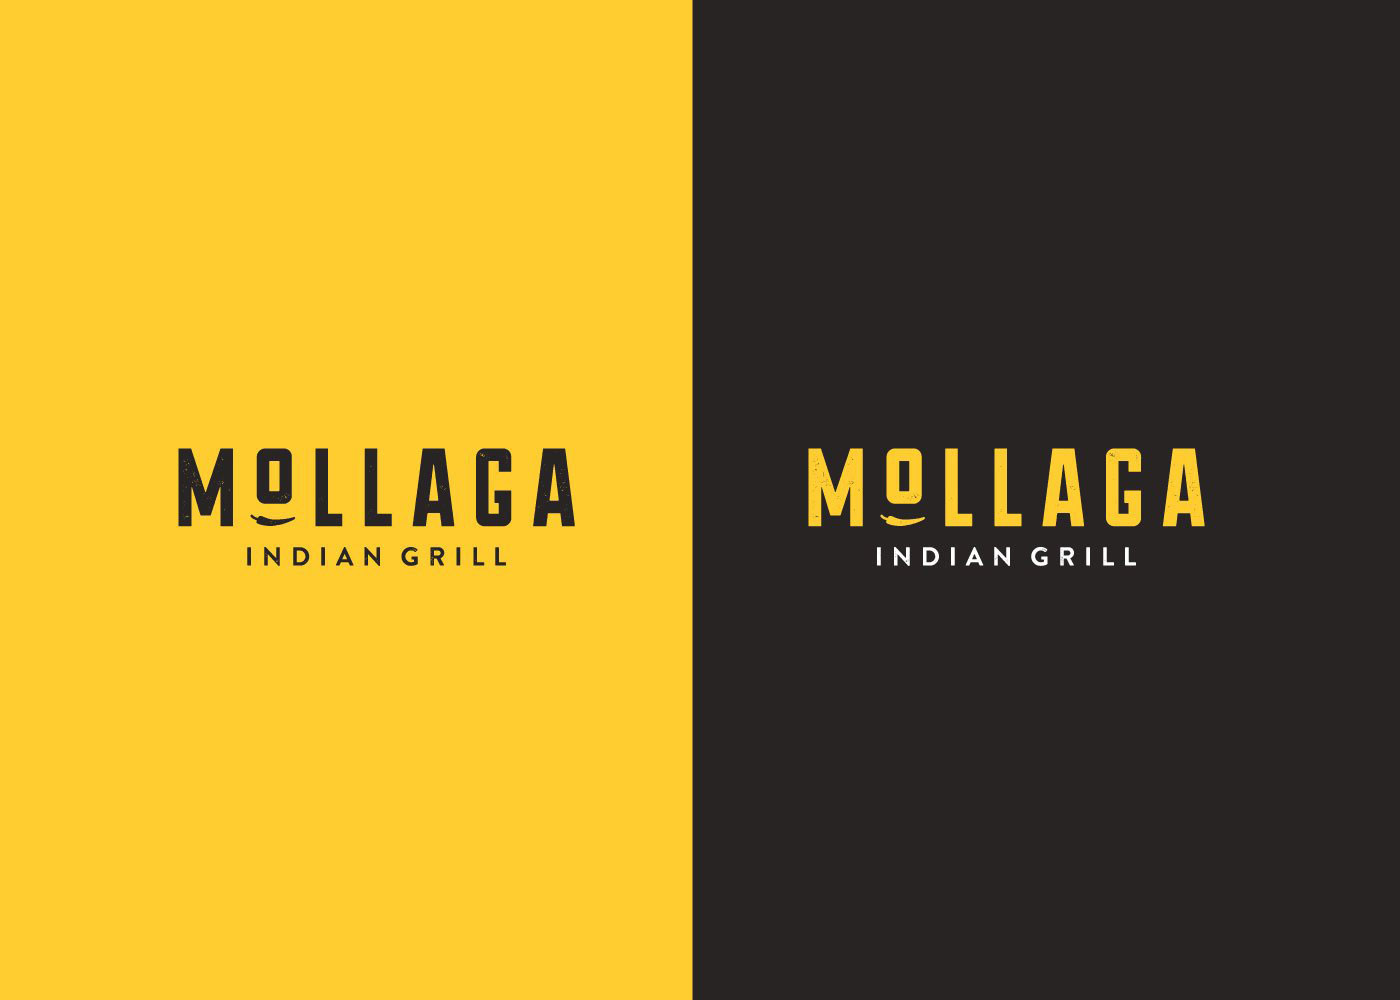 Mollaga Indian Grill